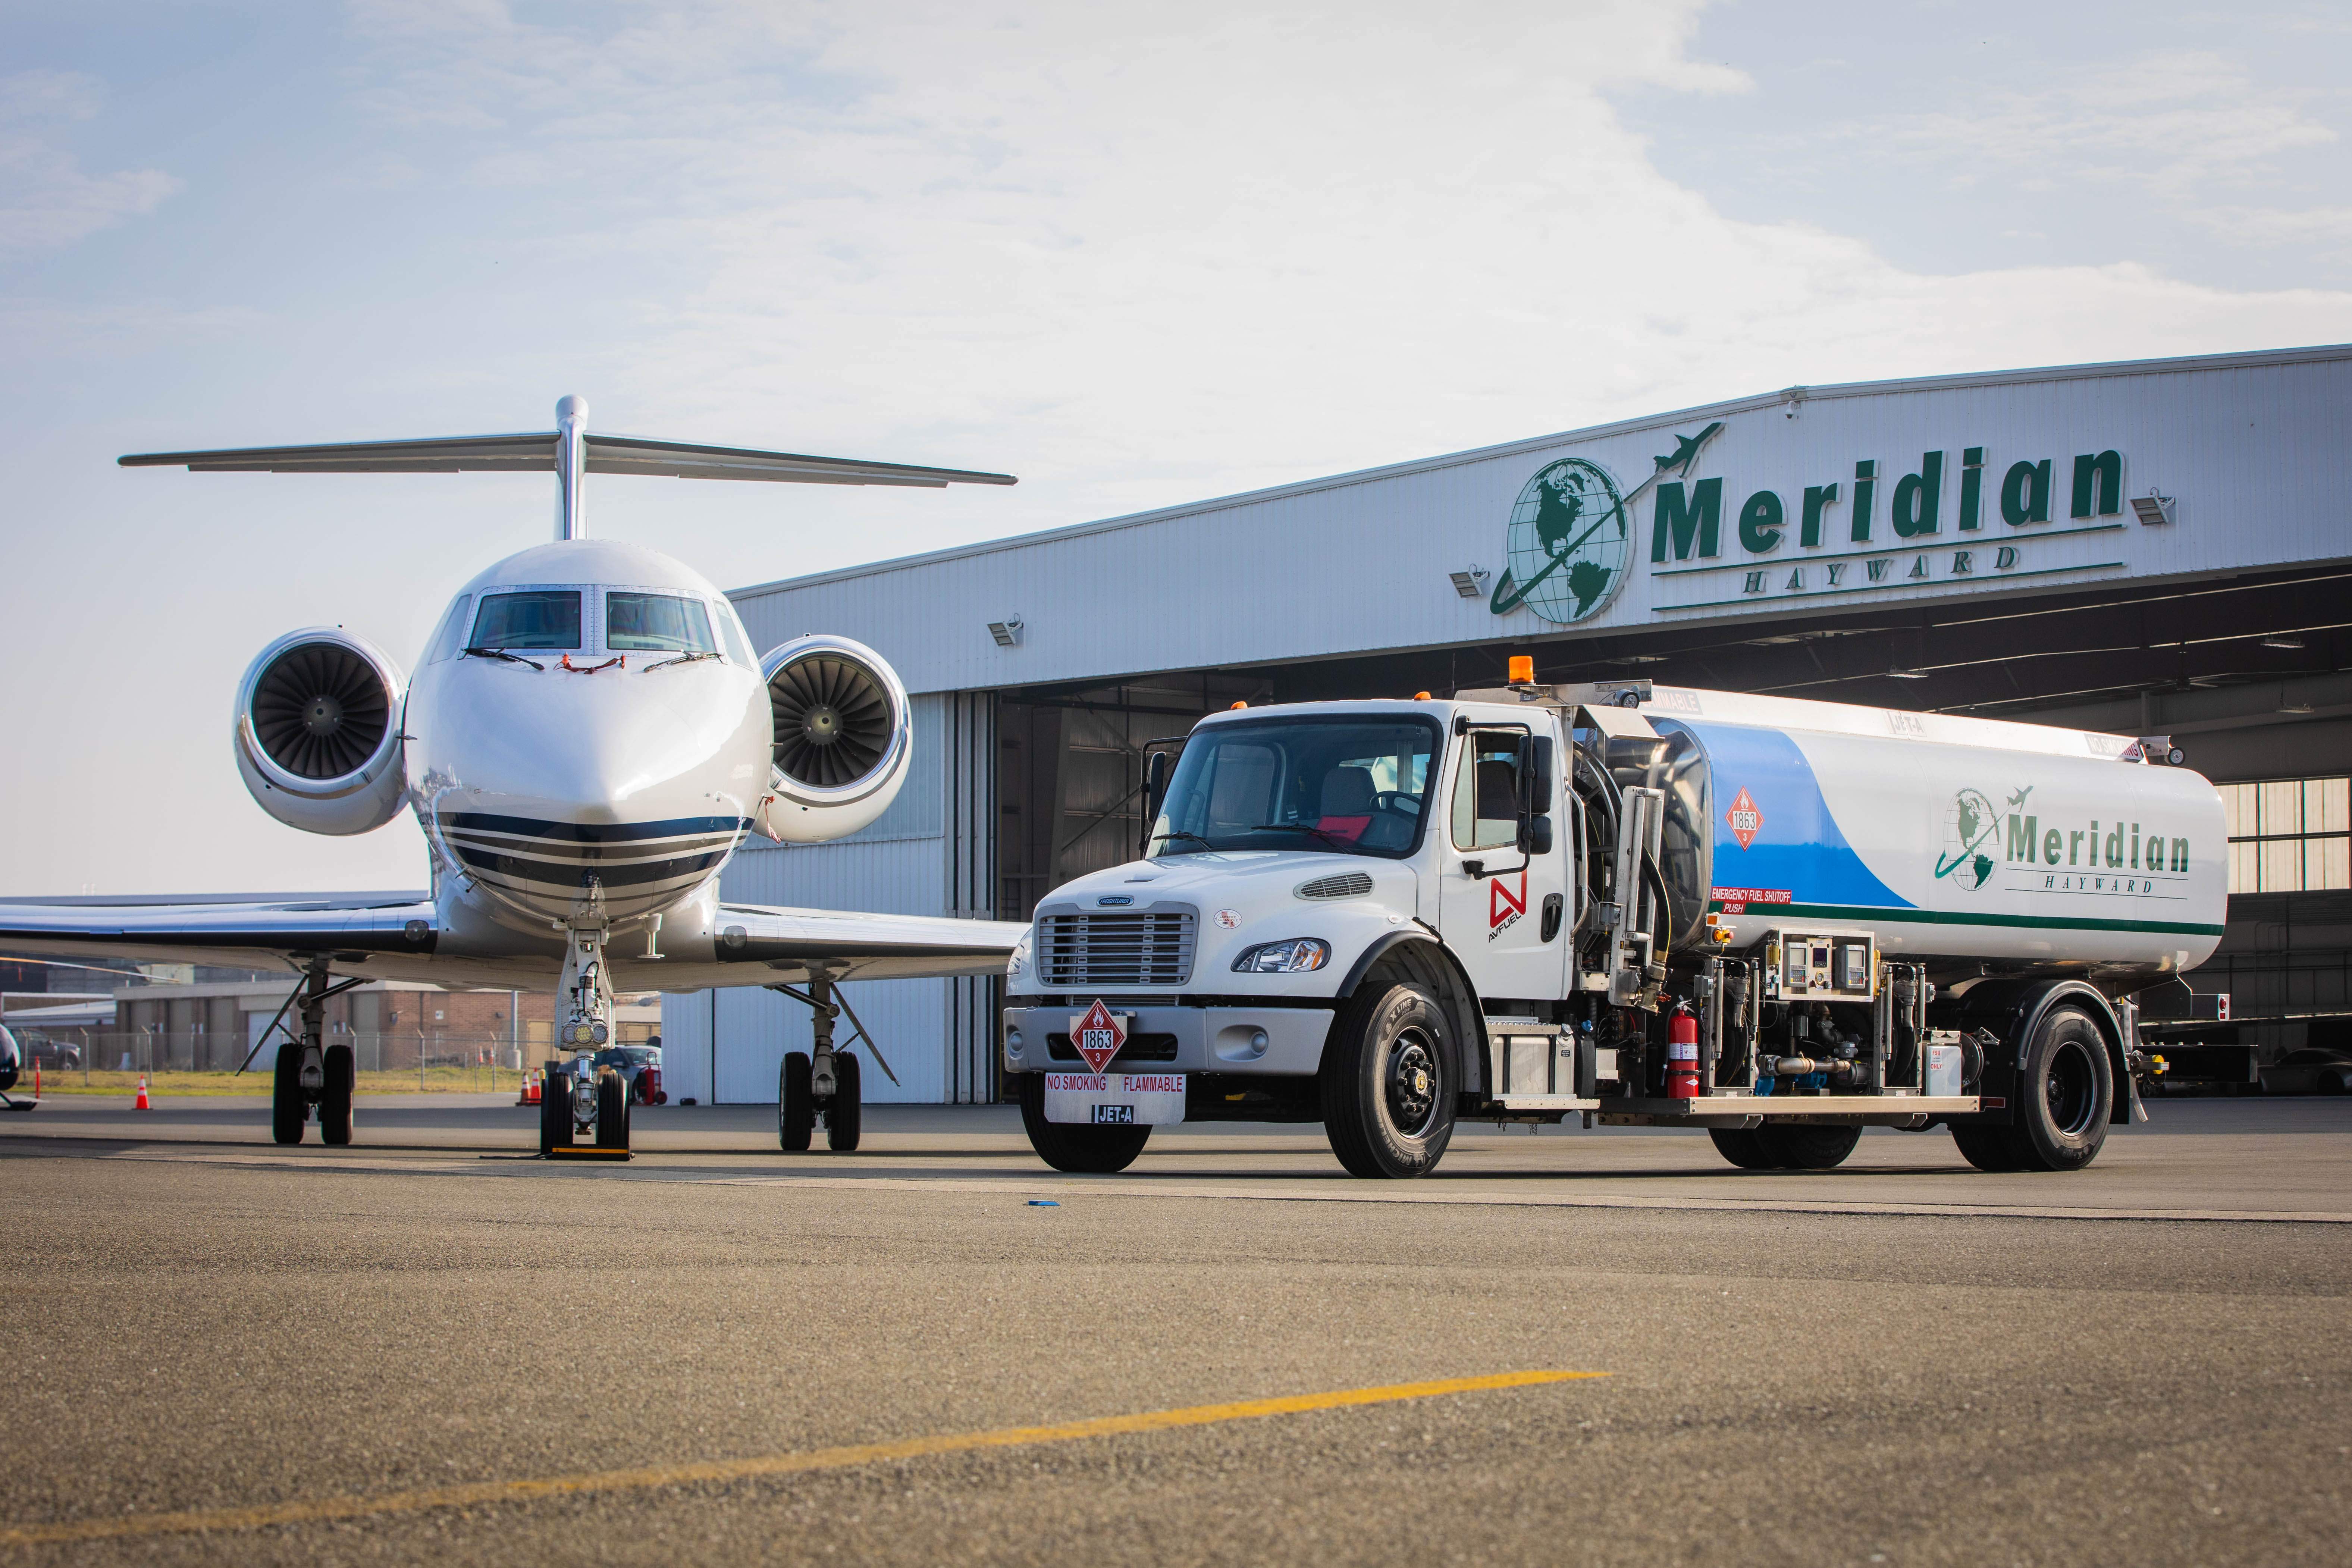 Meridian-Hayward joins Avfuel FBO Network